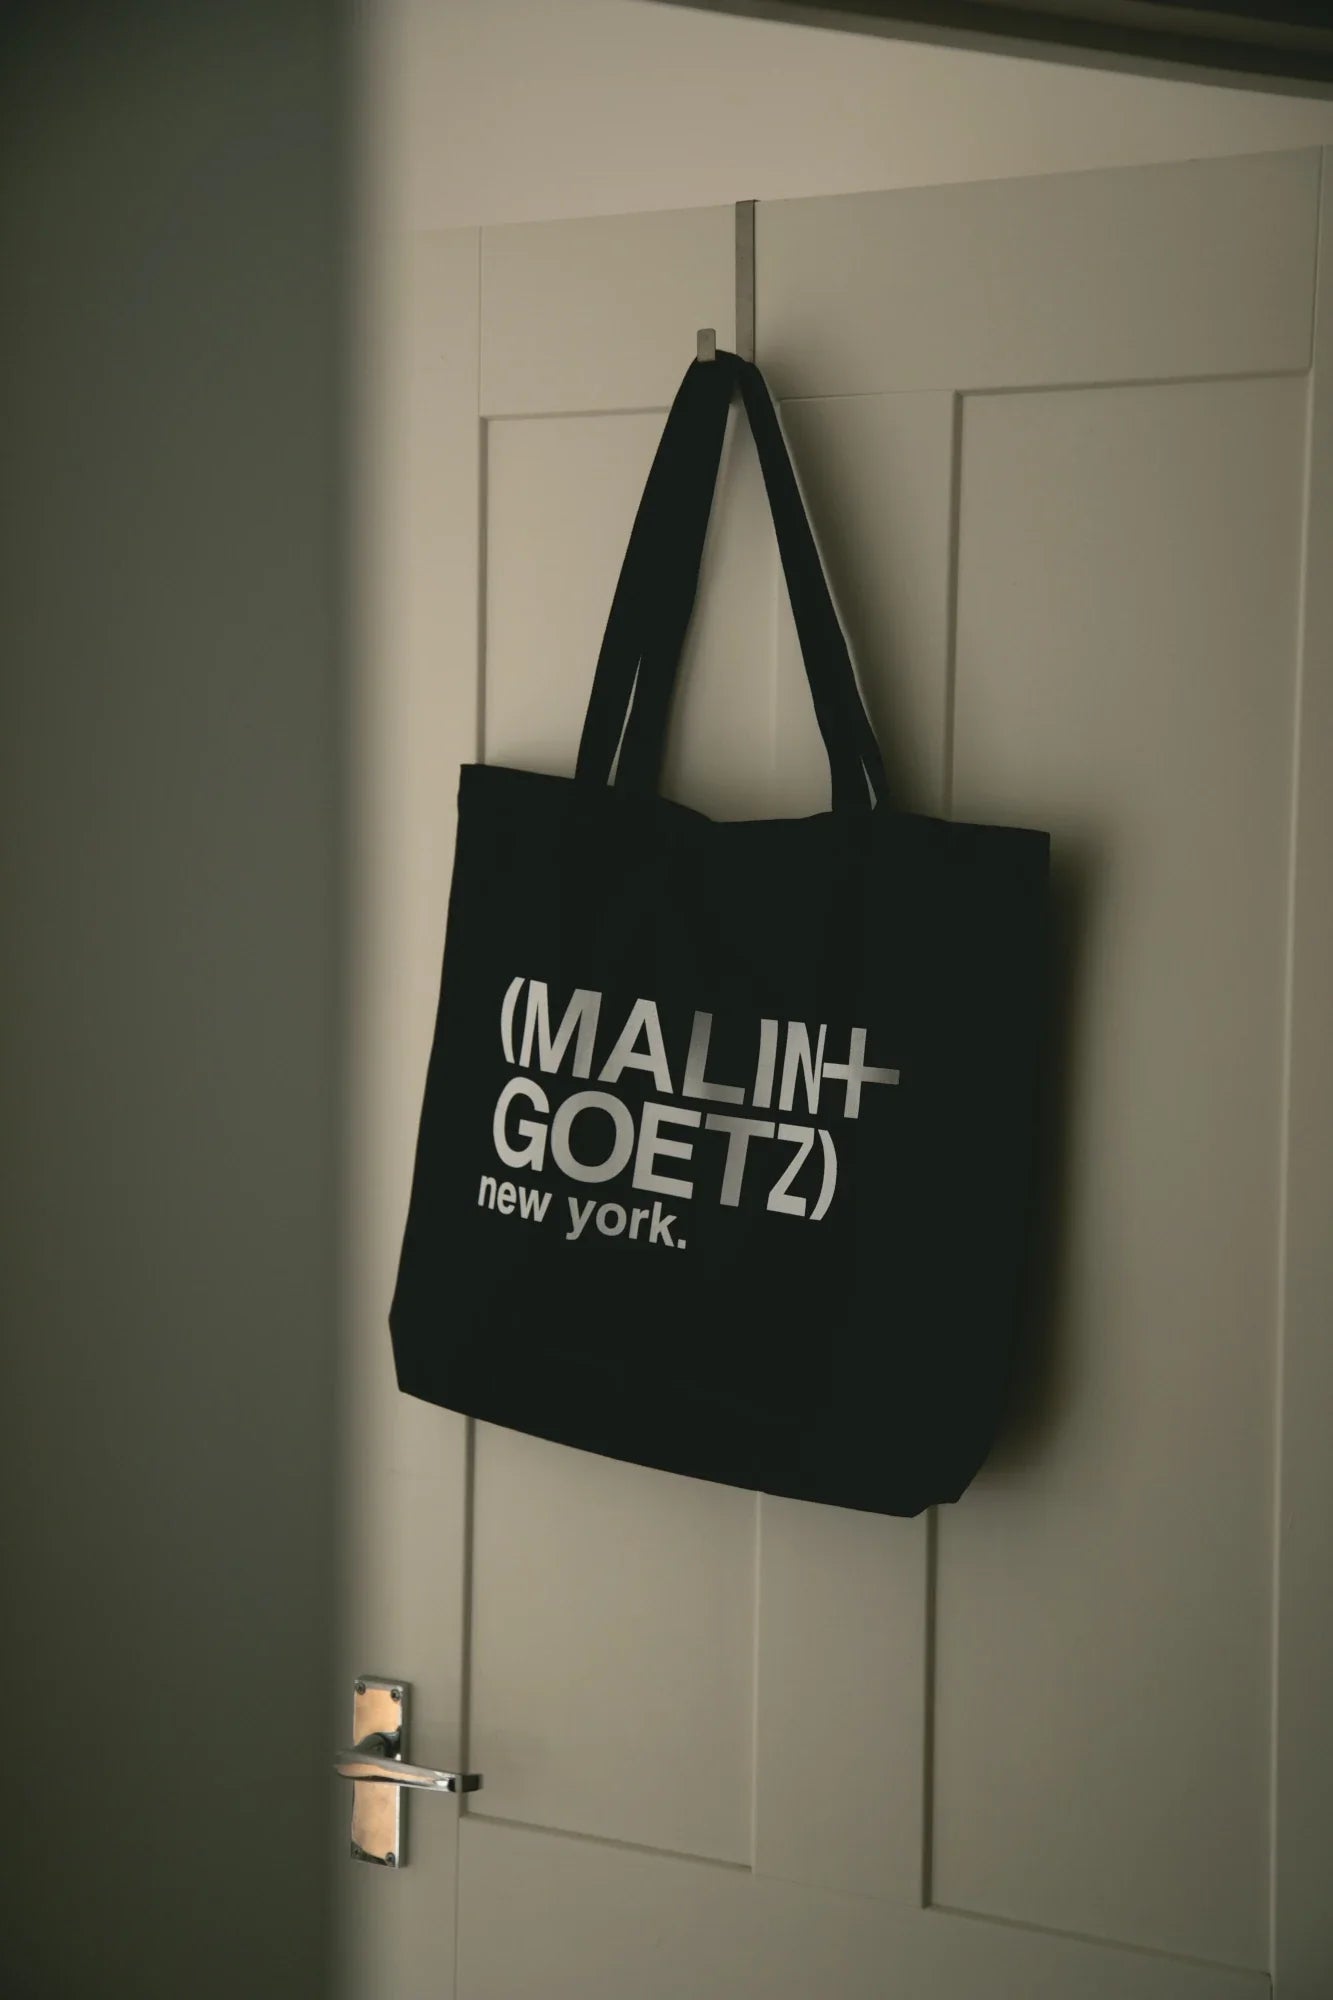 Malin+Goetz Tote Bag and Detox Face Mask offer